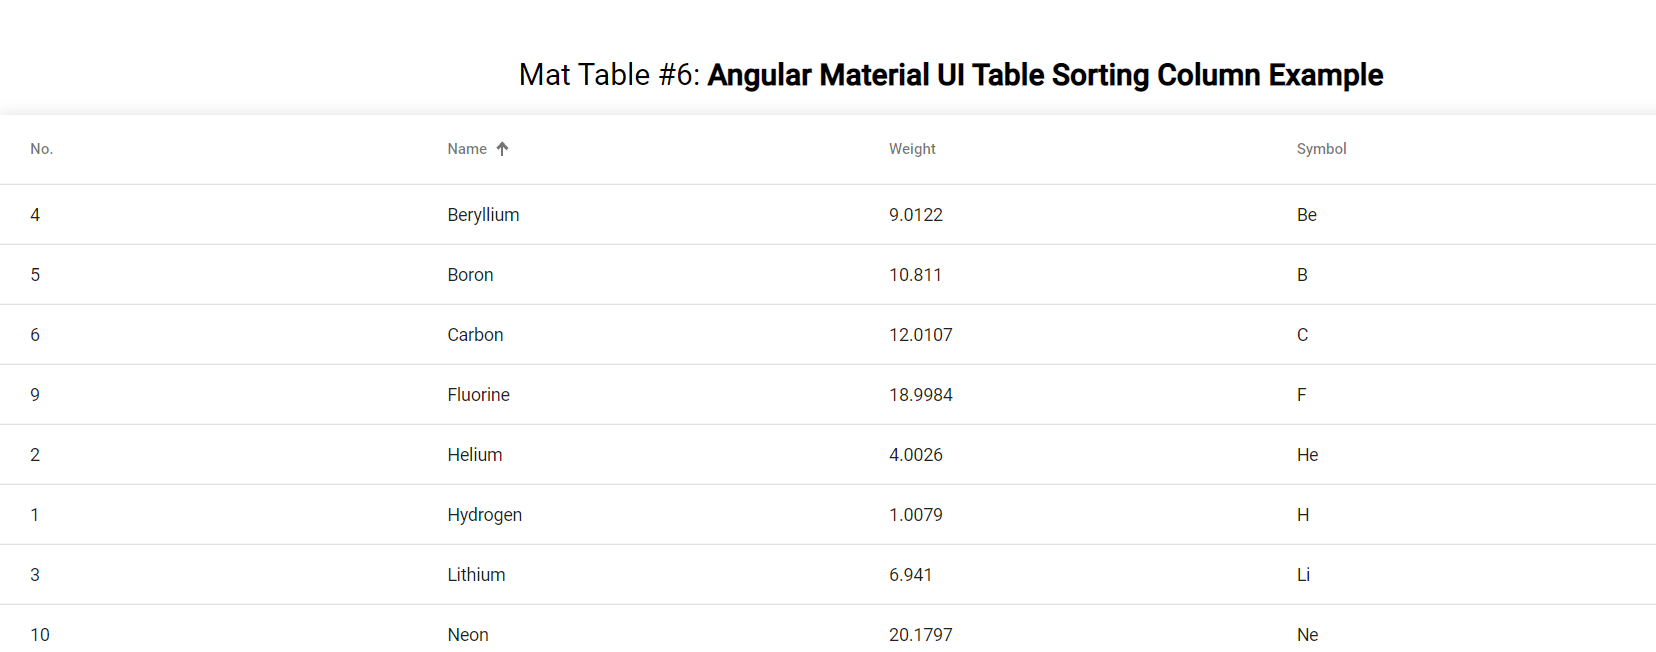 Angular Material UI Table Sorting Column Example